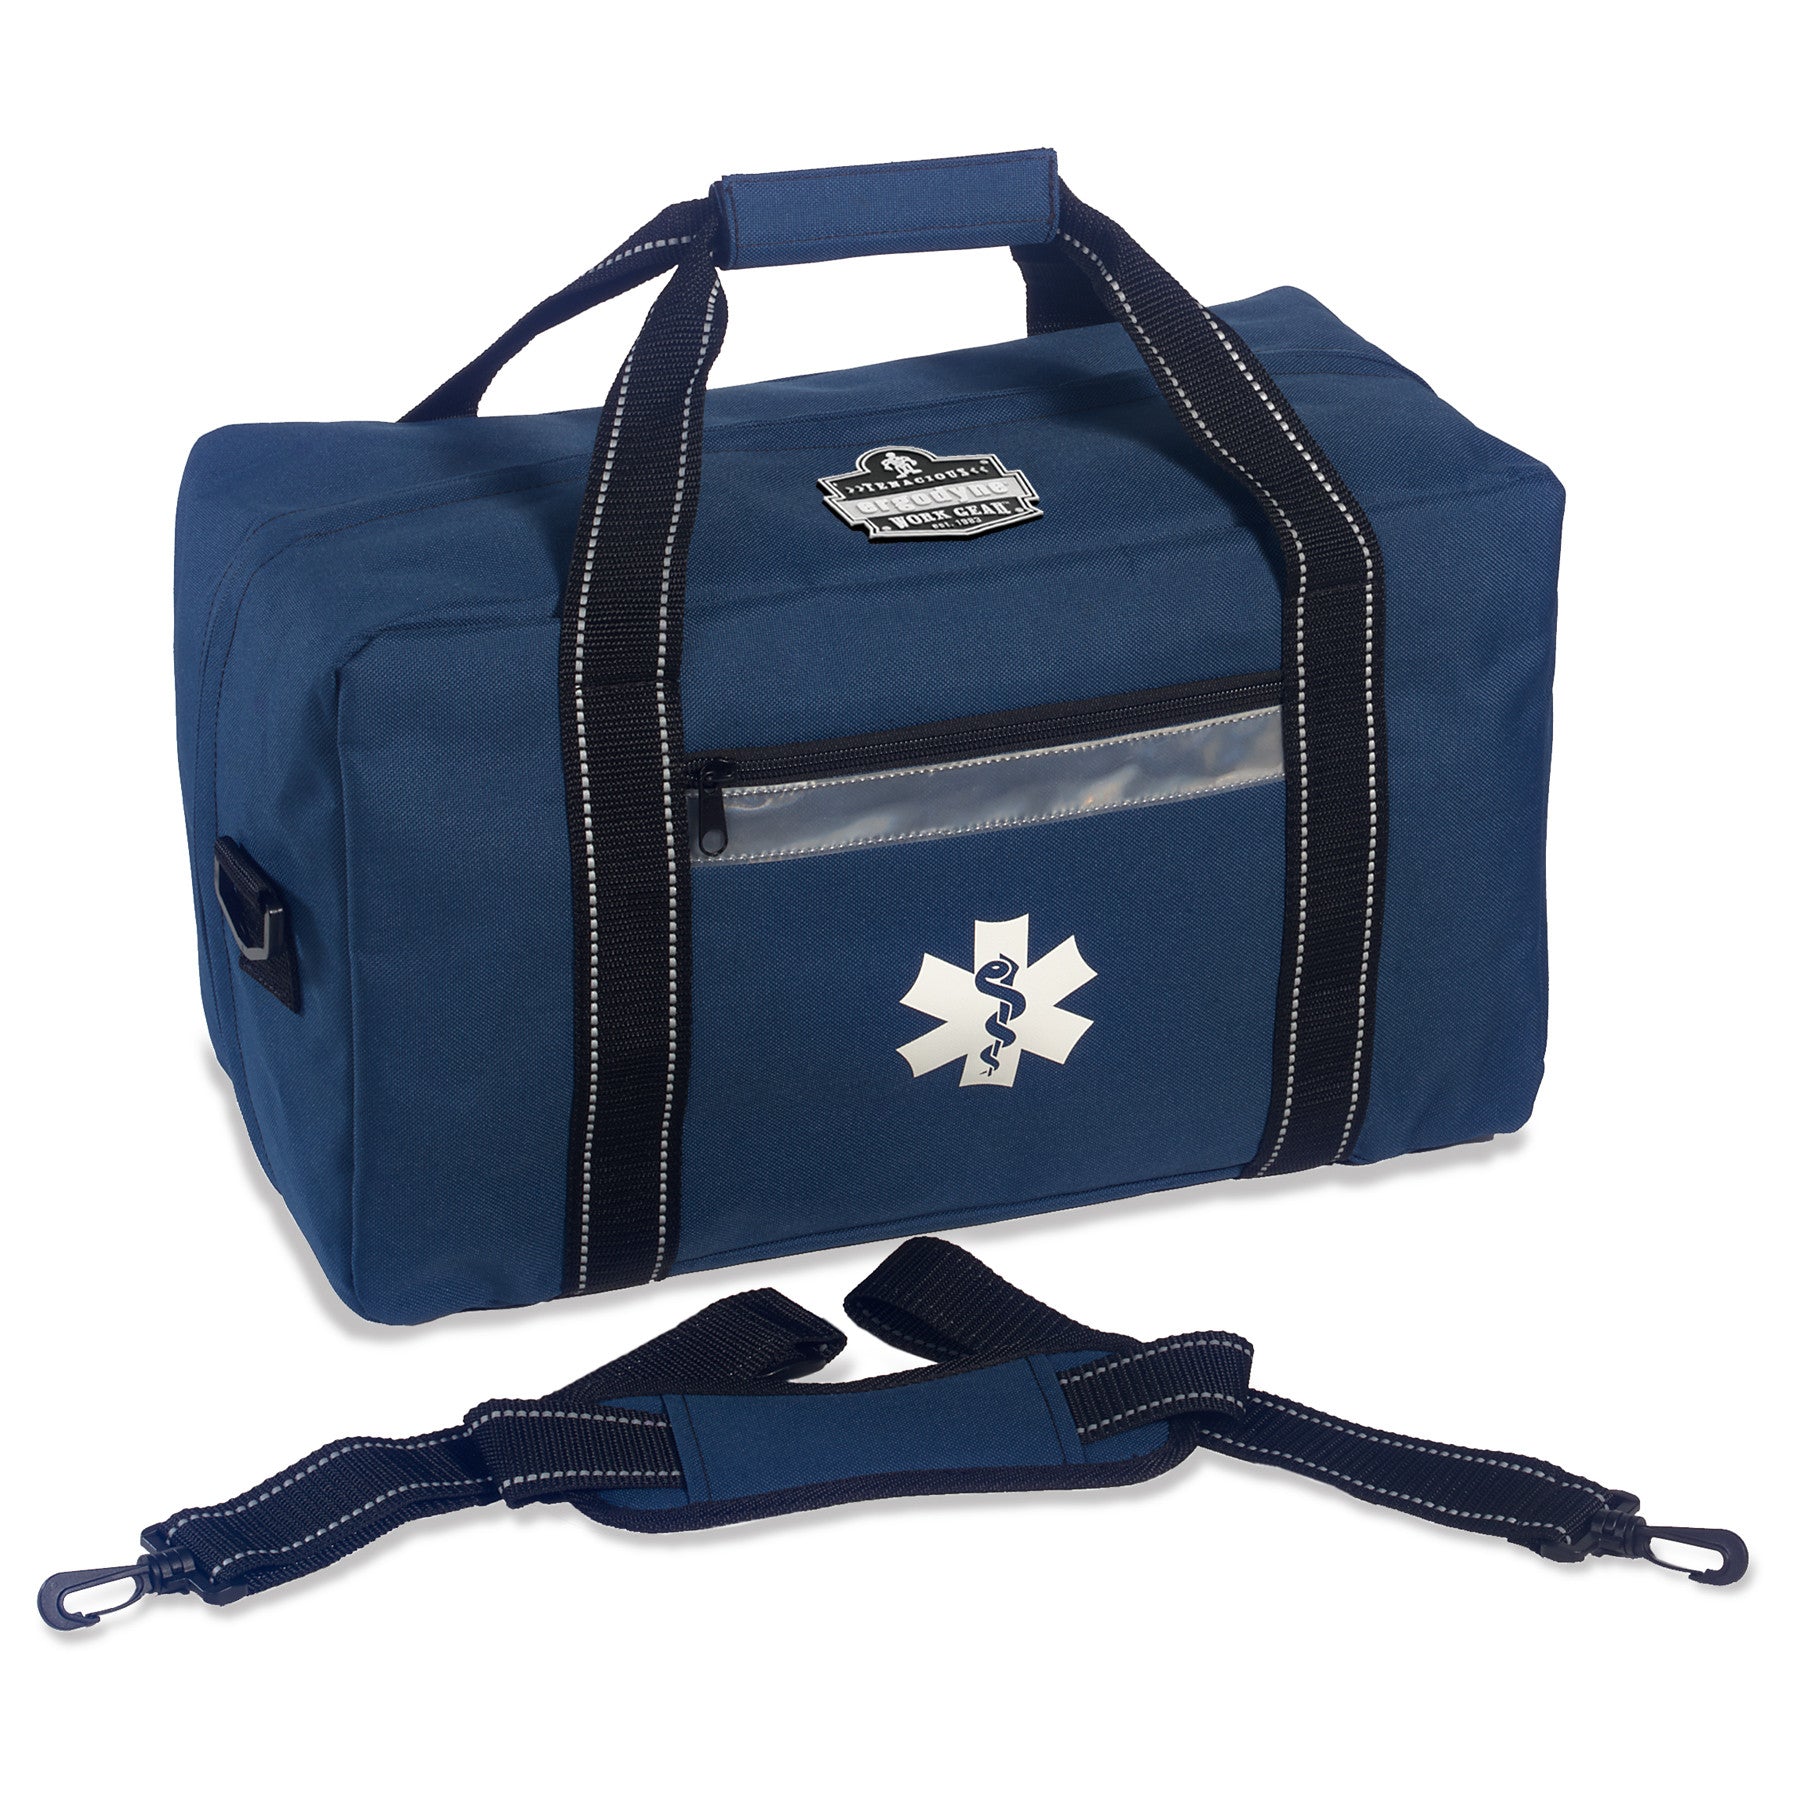 Arsenal 5220 Responder Trauma Bag-eSafety Supplies, Inc